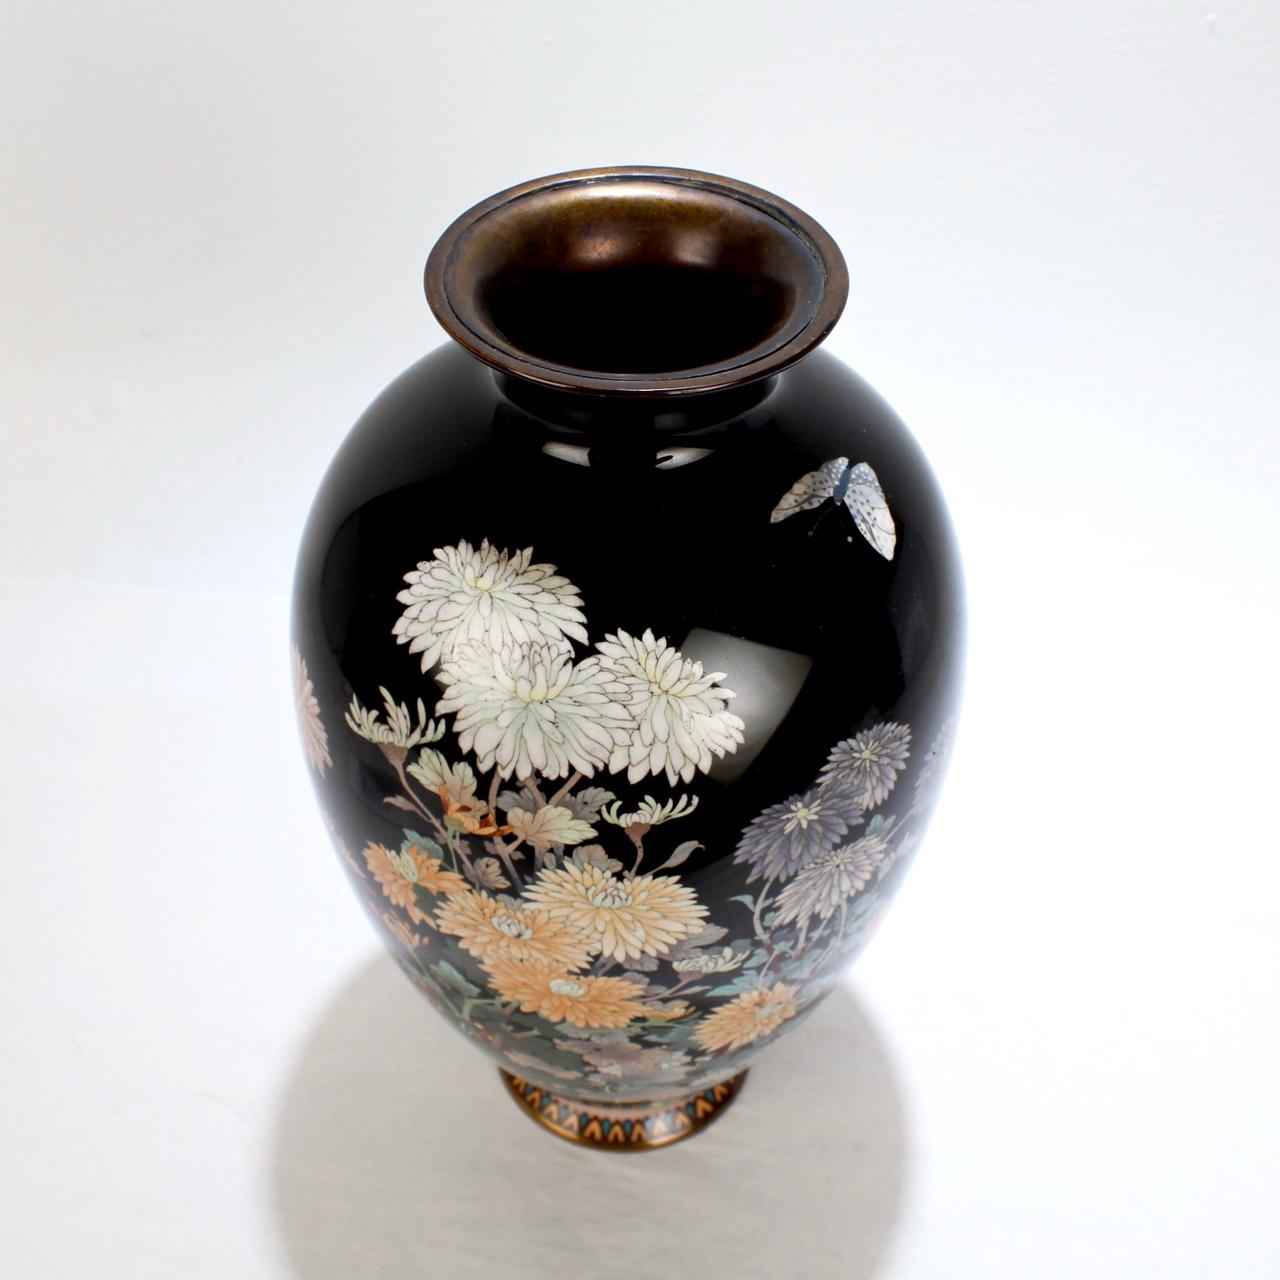 20th Century Antique Meiji Japanese Cloisonné Black Enamel Vase with Flowers and Butterflies